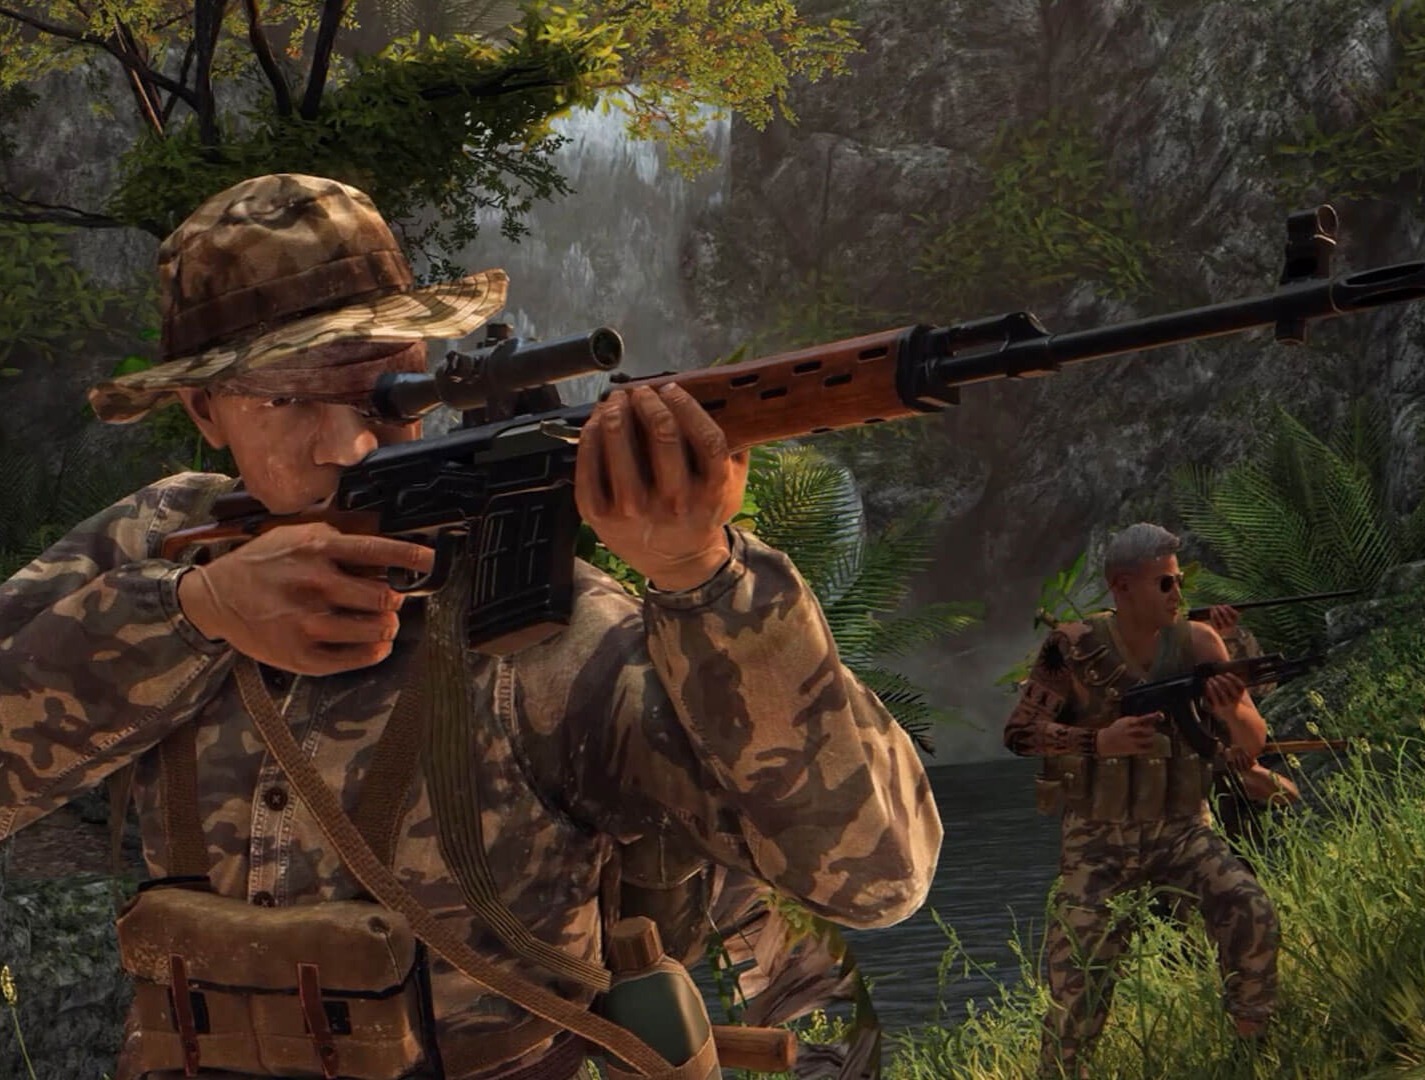 Rising Storm 2: Vietnam - Sgt Joe's Support Bundle DLC Steam CD Key bg